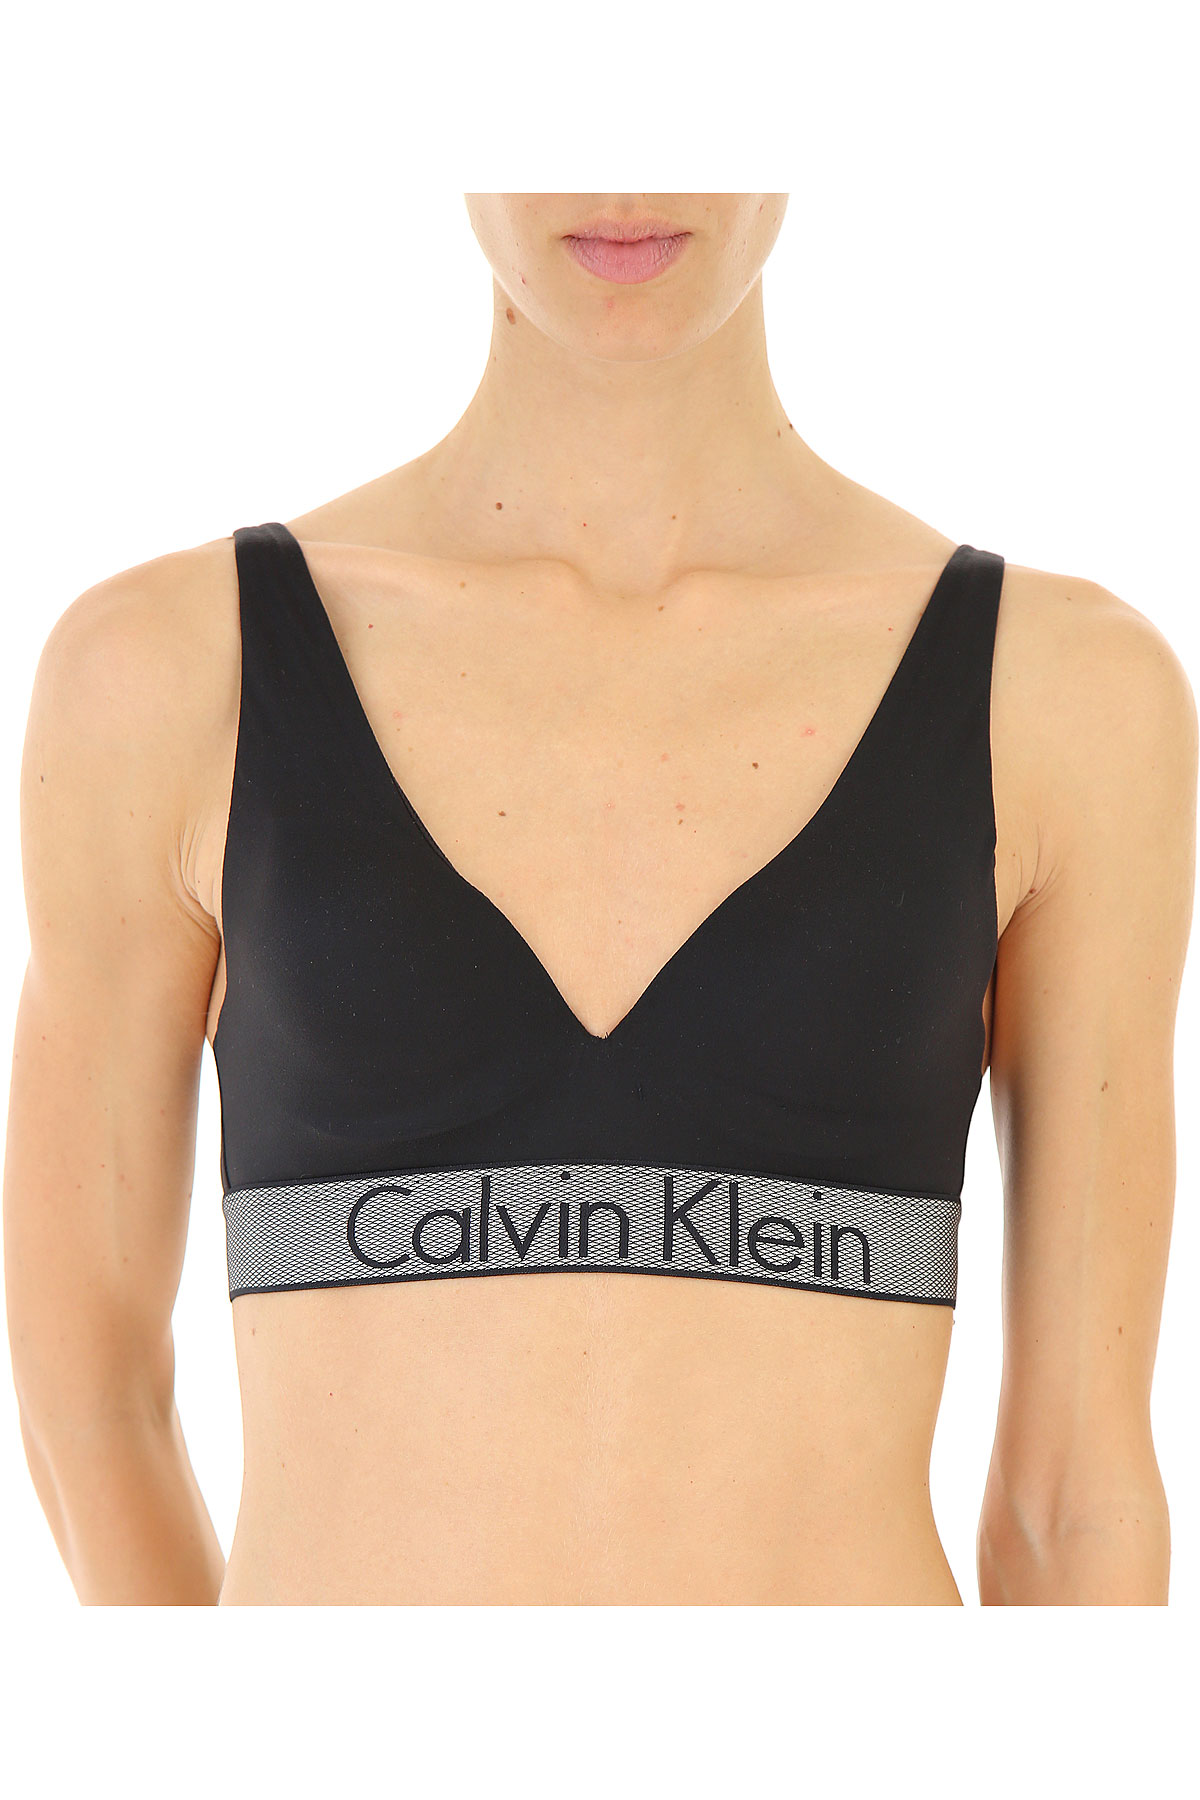 Calvin Klein Sous-vêtement Femme, Noir, Polyamide, 2017, 80 85